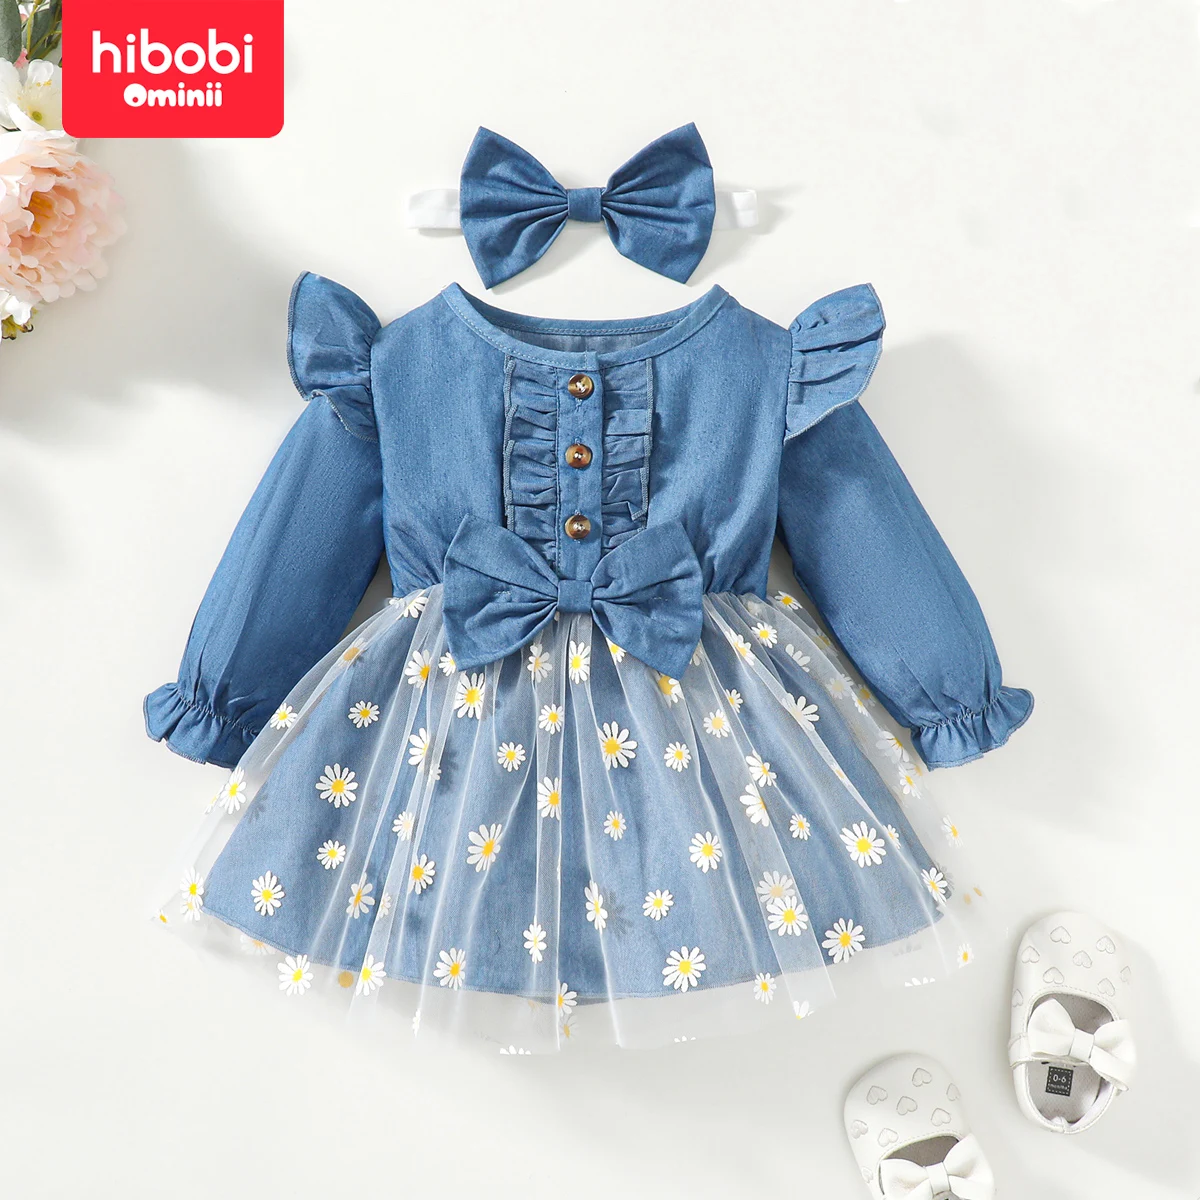 hibobi Baby Girl Round Neck Fashionable Elegant Leisure Bow-Knot Ruffle Decor Long Sleeve Floral Mesh Splicing Dress & Headband